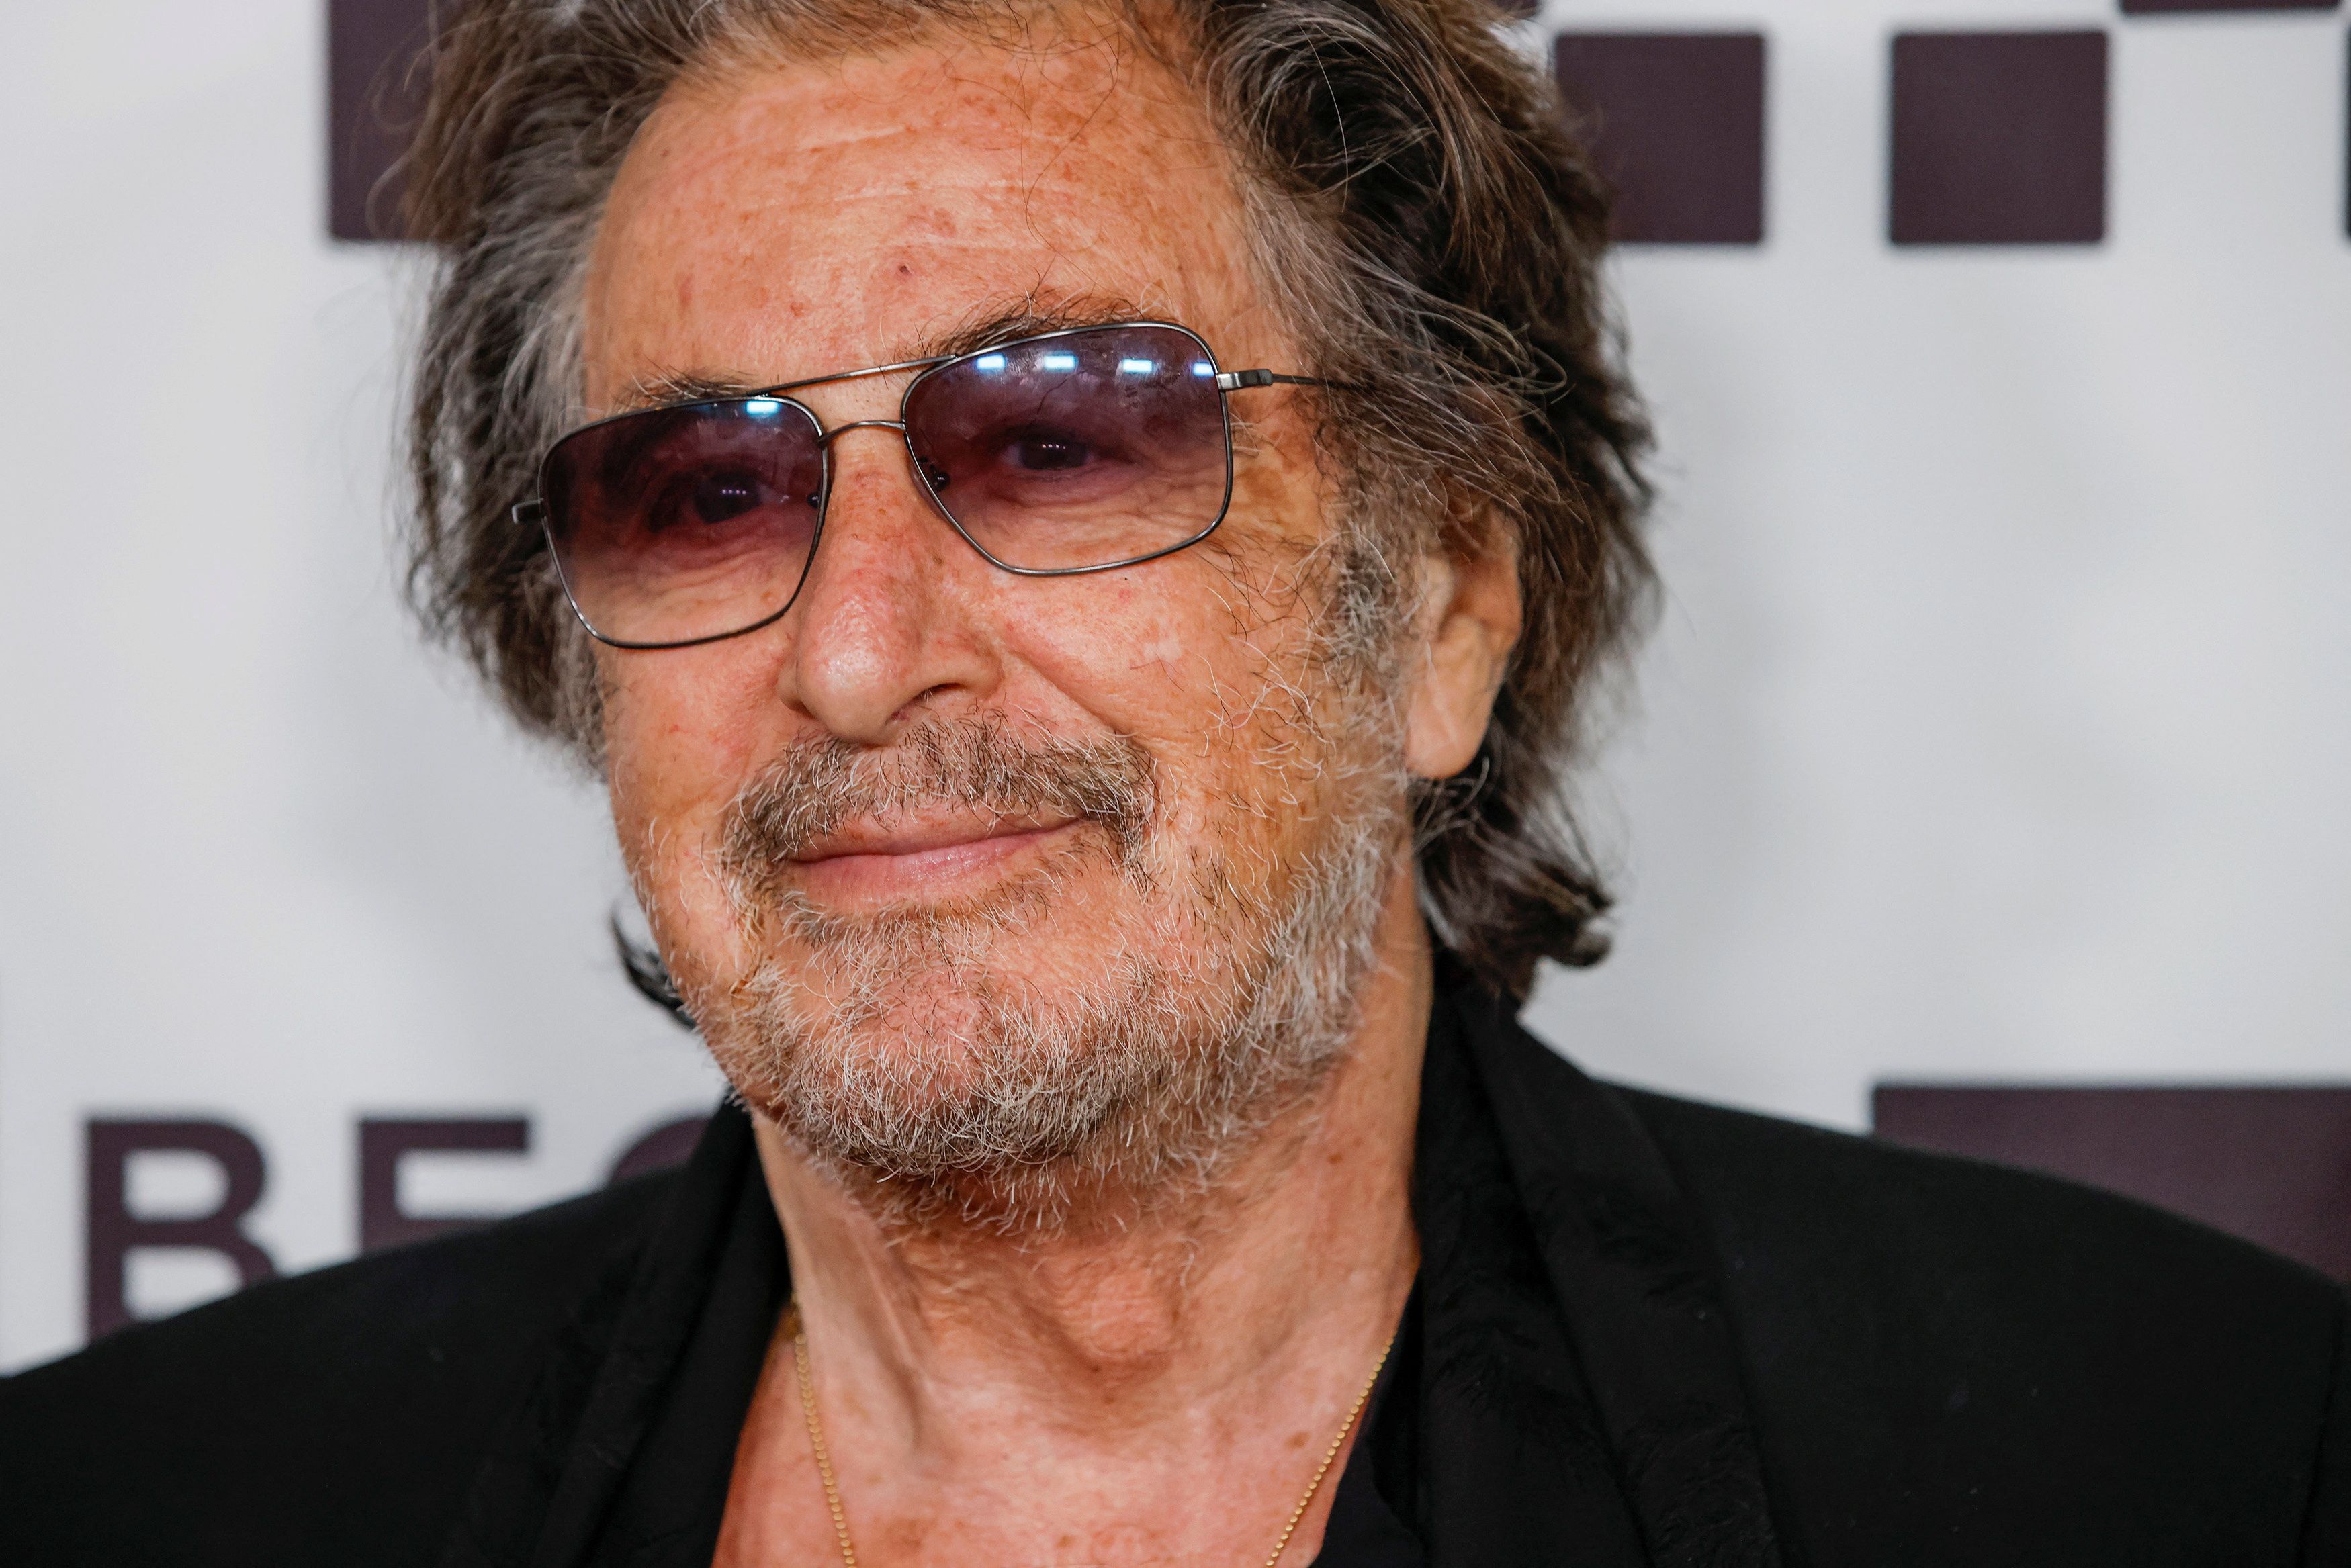 Al Pacino during his visit to the Tribeca festival (REUTERS / Eduardo Munoz)